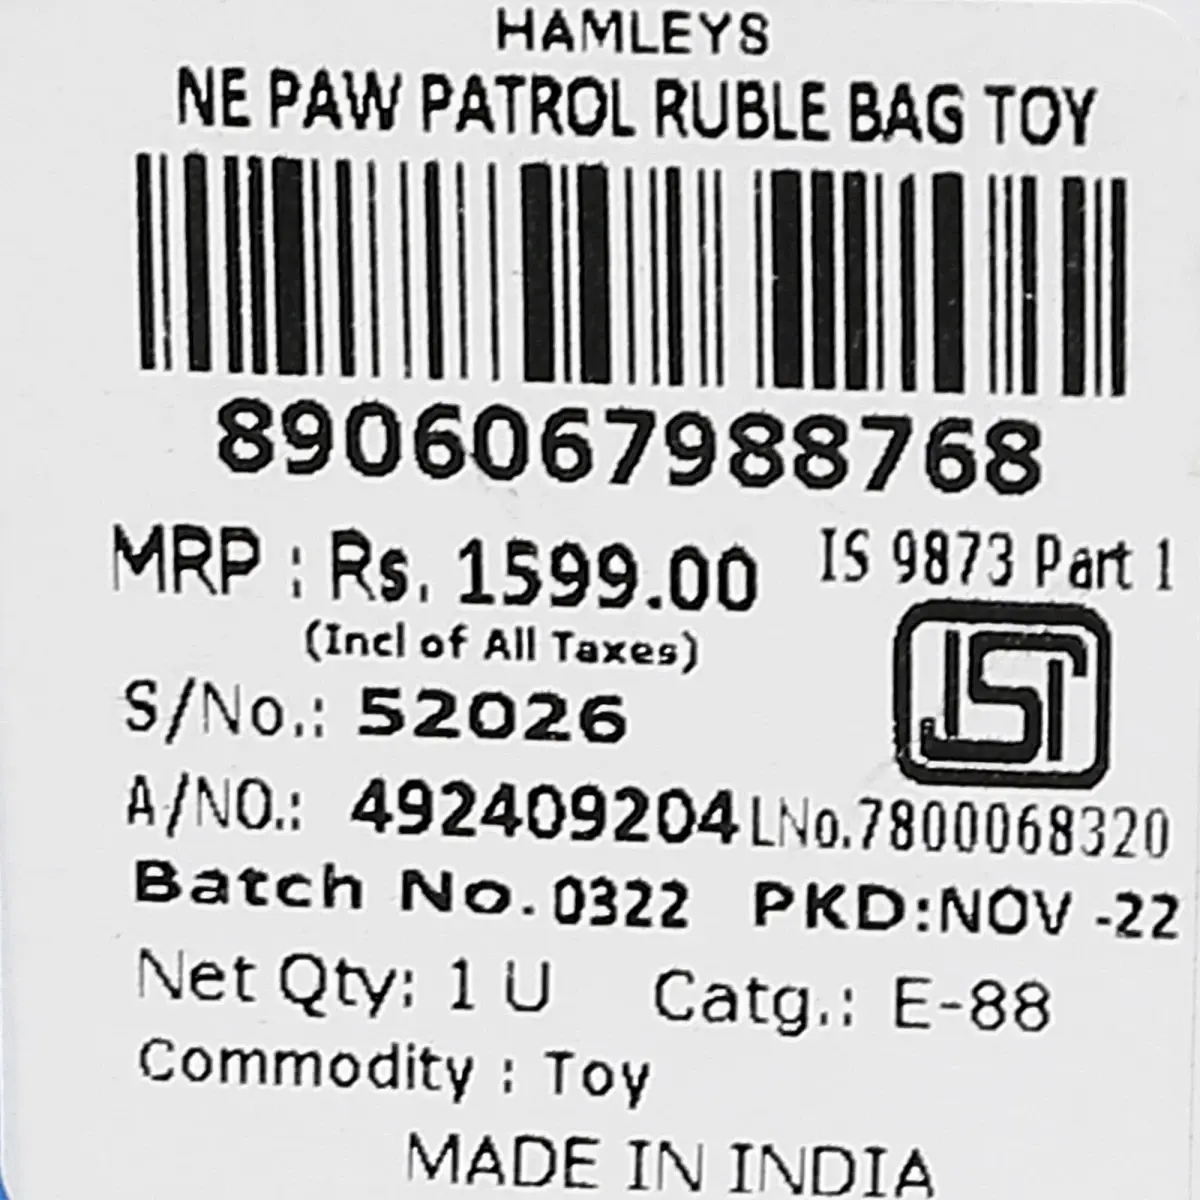 Fuzzbuzz Paw Patrol Ruble Bag Toy, 3Y+, Multicolour